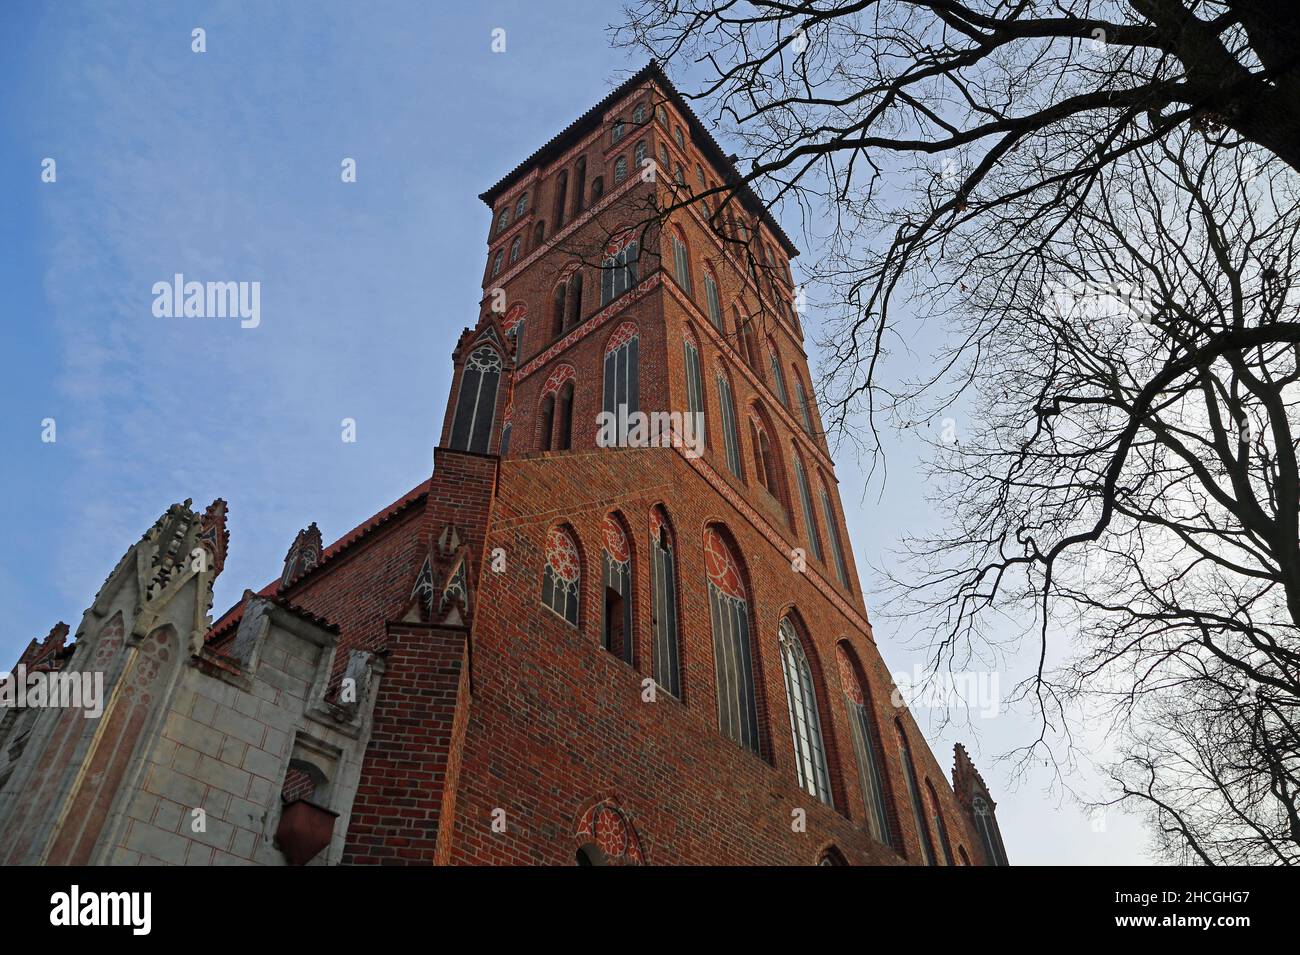 The tower and the tree - Saint Jacob's Church - Torun, Poland Stock Photo